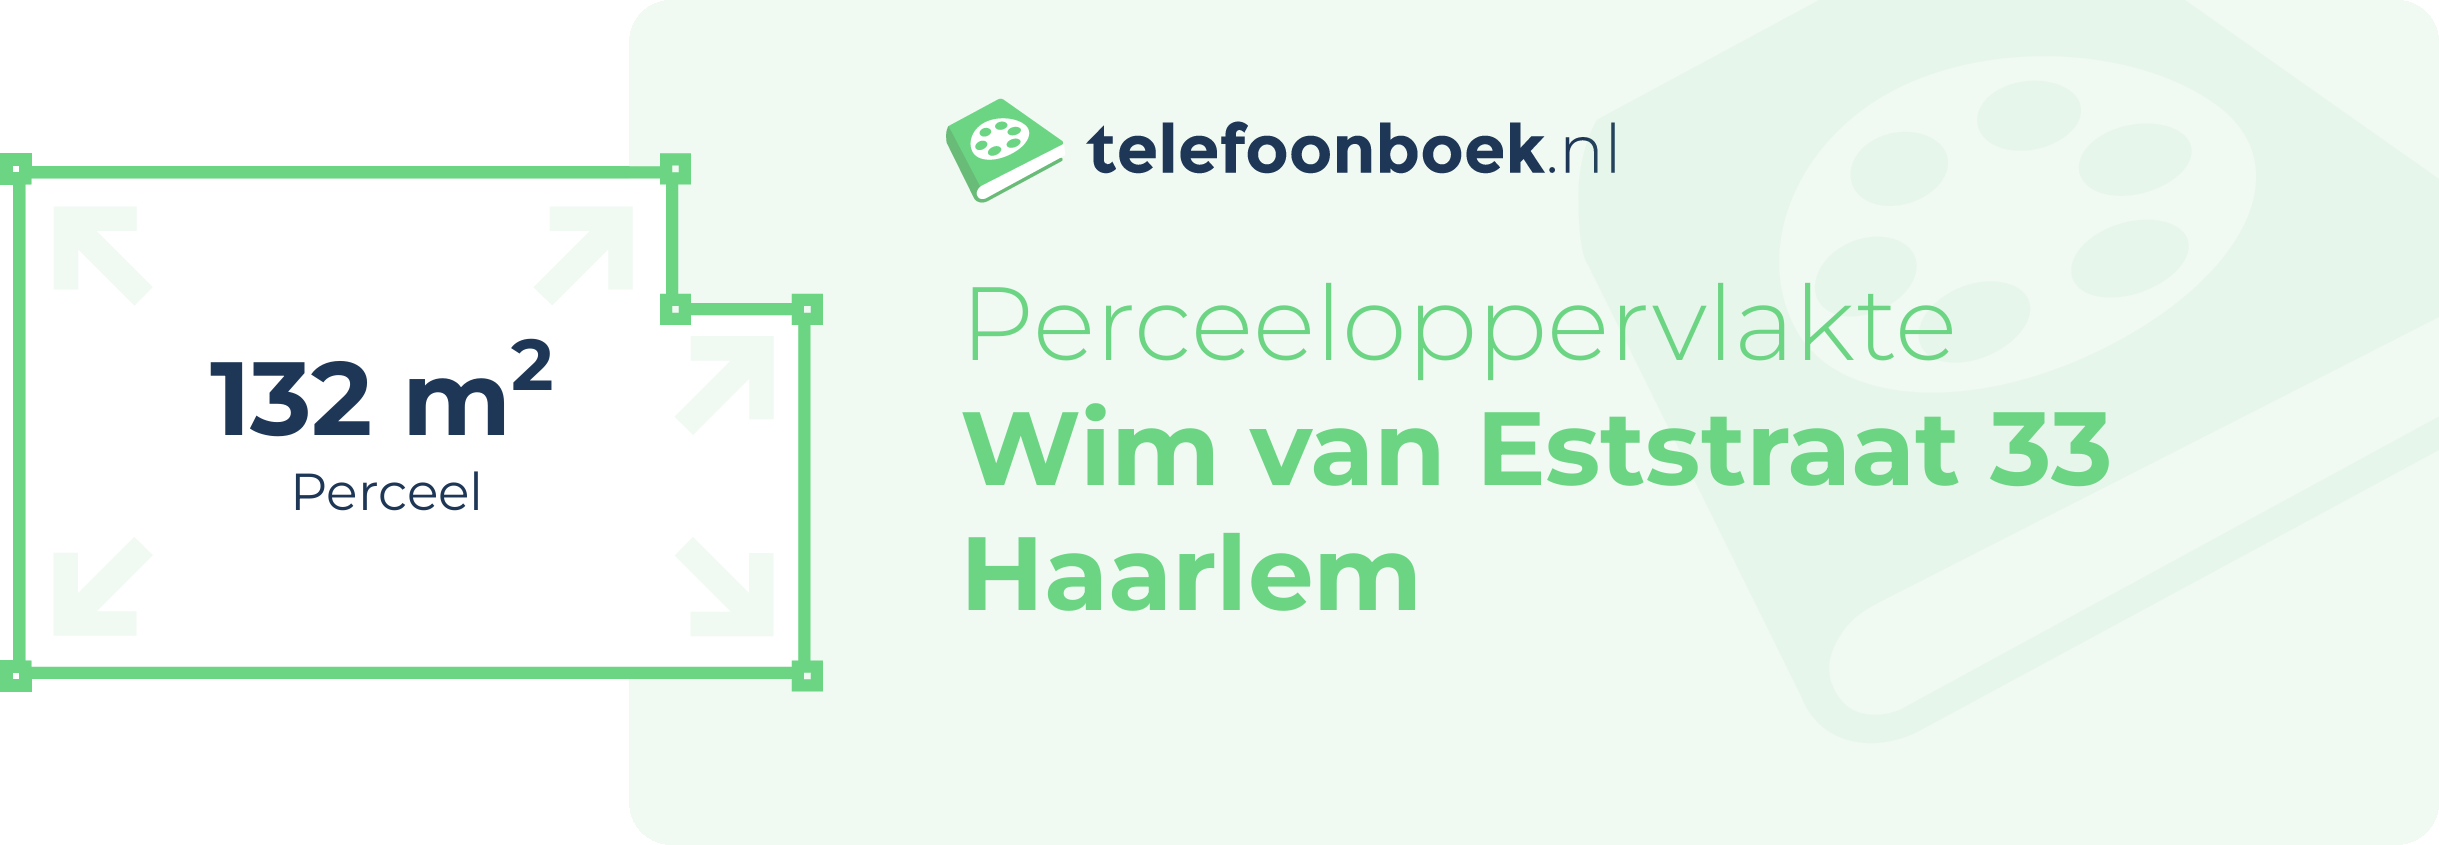 Perceeloppervlakte Wim Van Eststraat 33 Haarlem